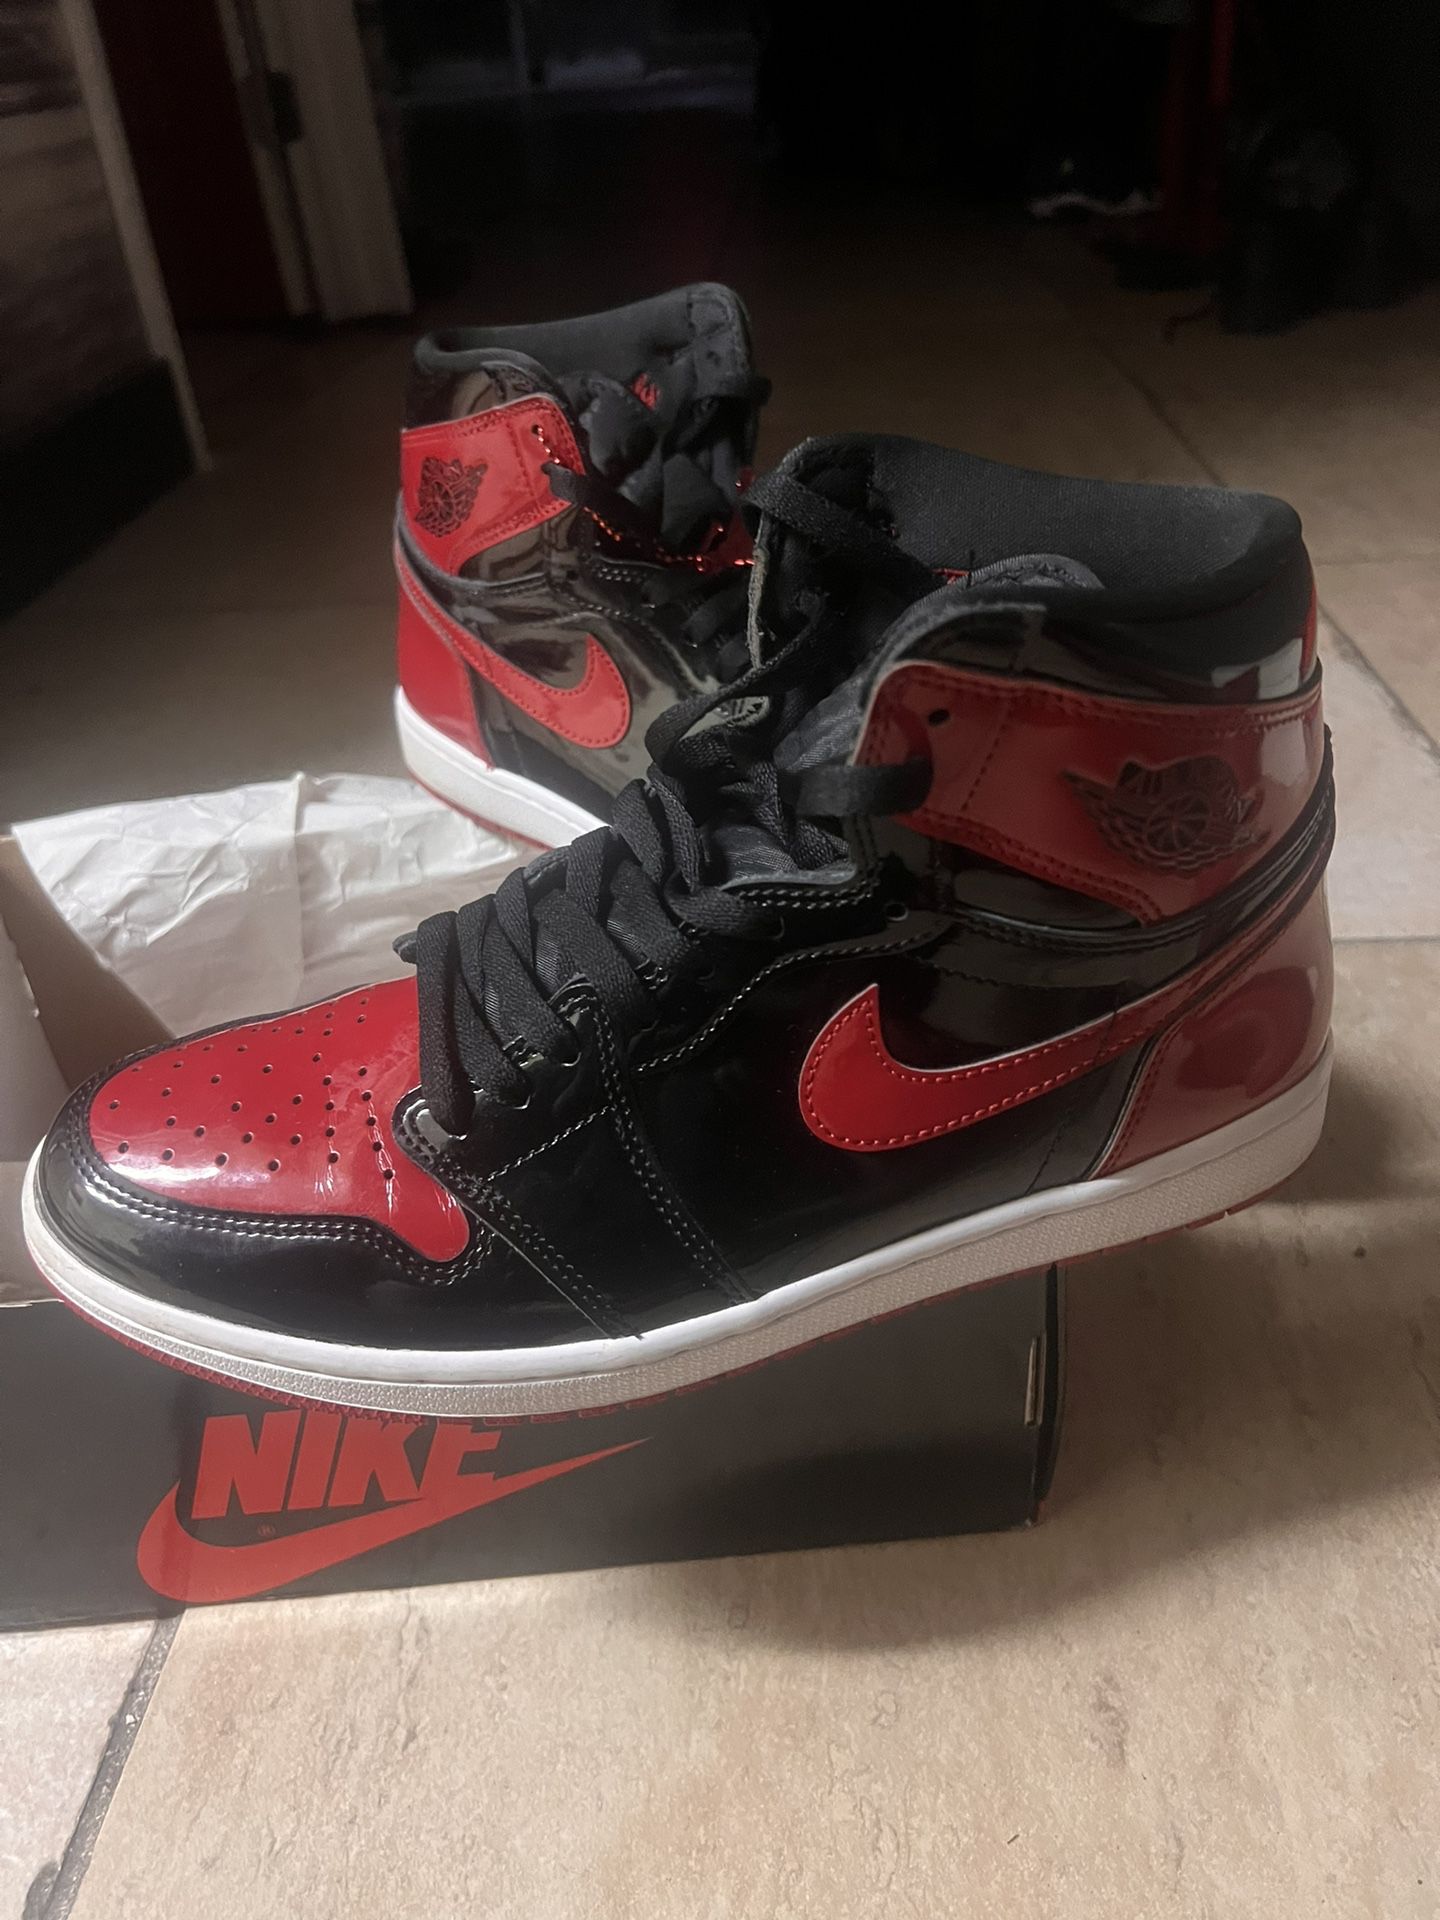 Air Jordan Retro 1 OG Patent Leather Men’s Size 10.5